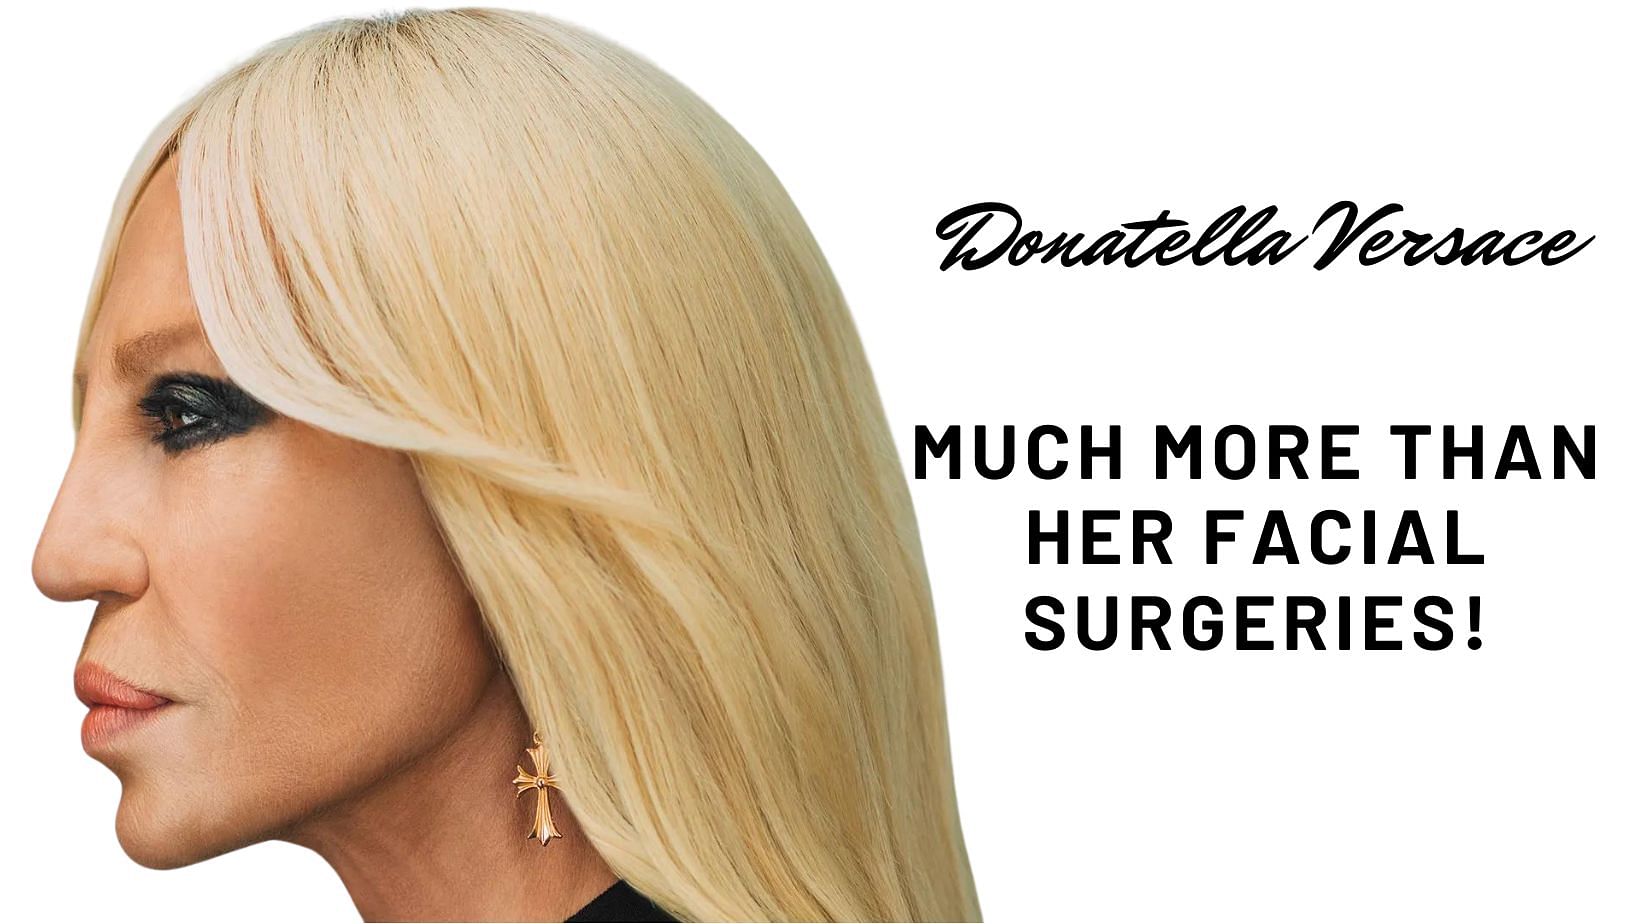 Donatella Versace Says Versace Will Stop Using Fur in Designs